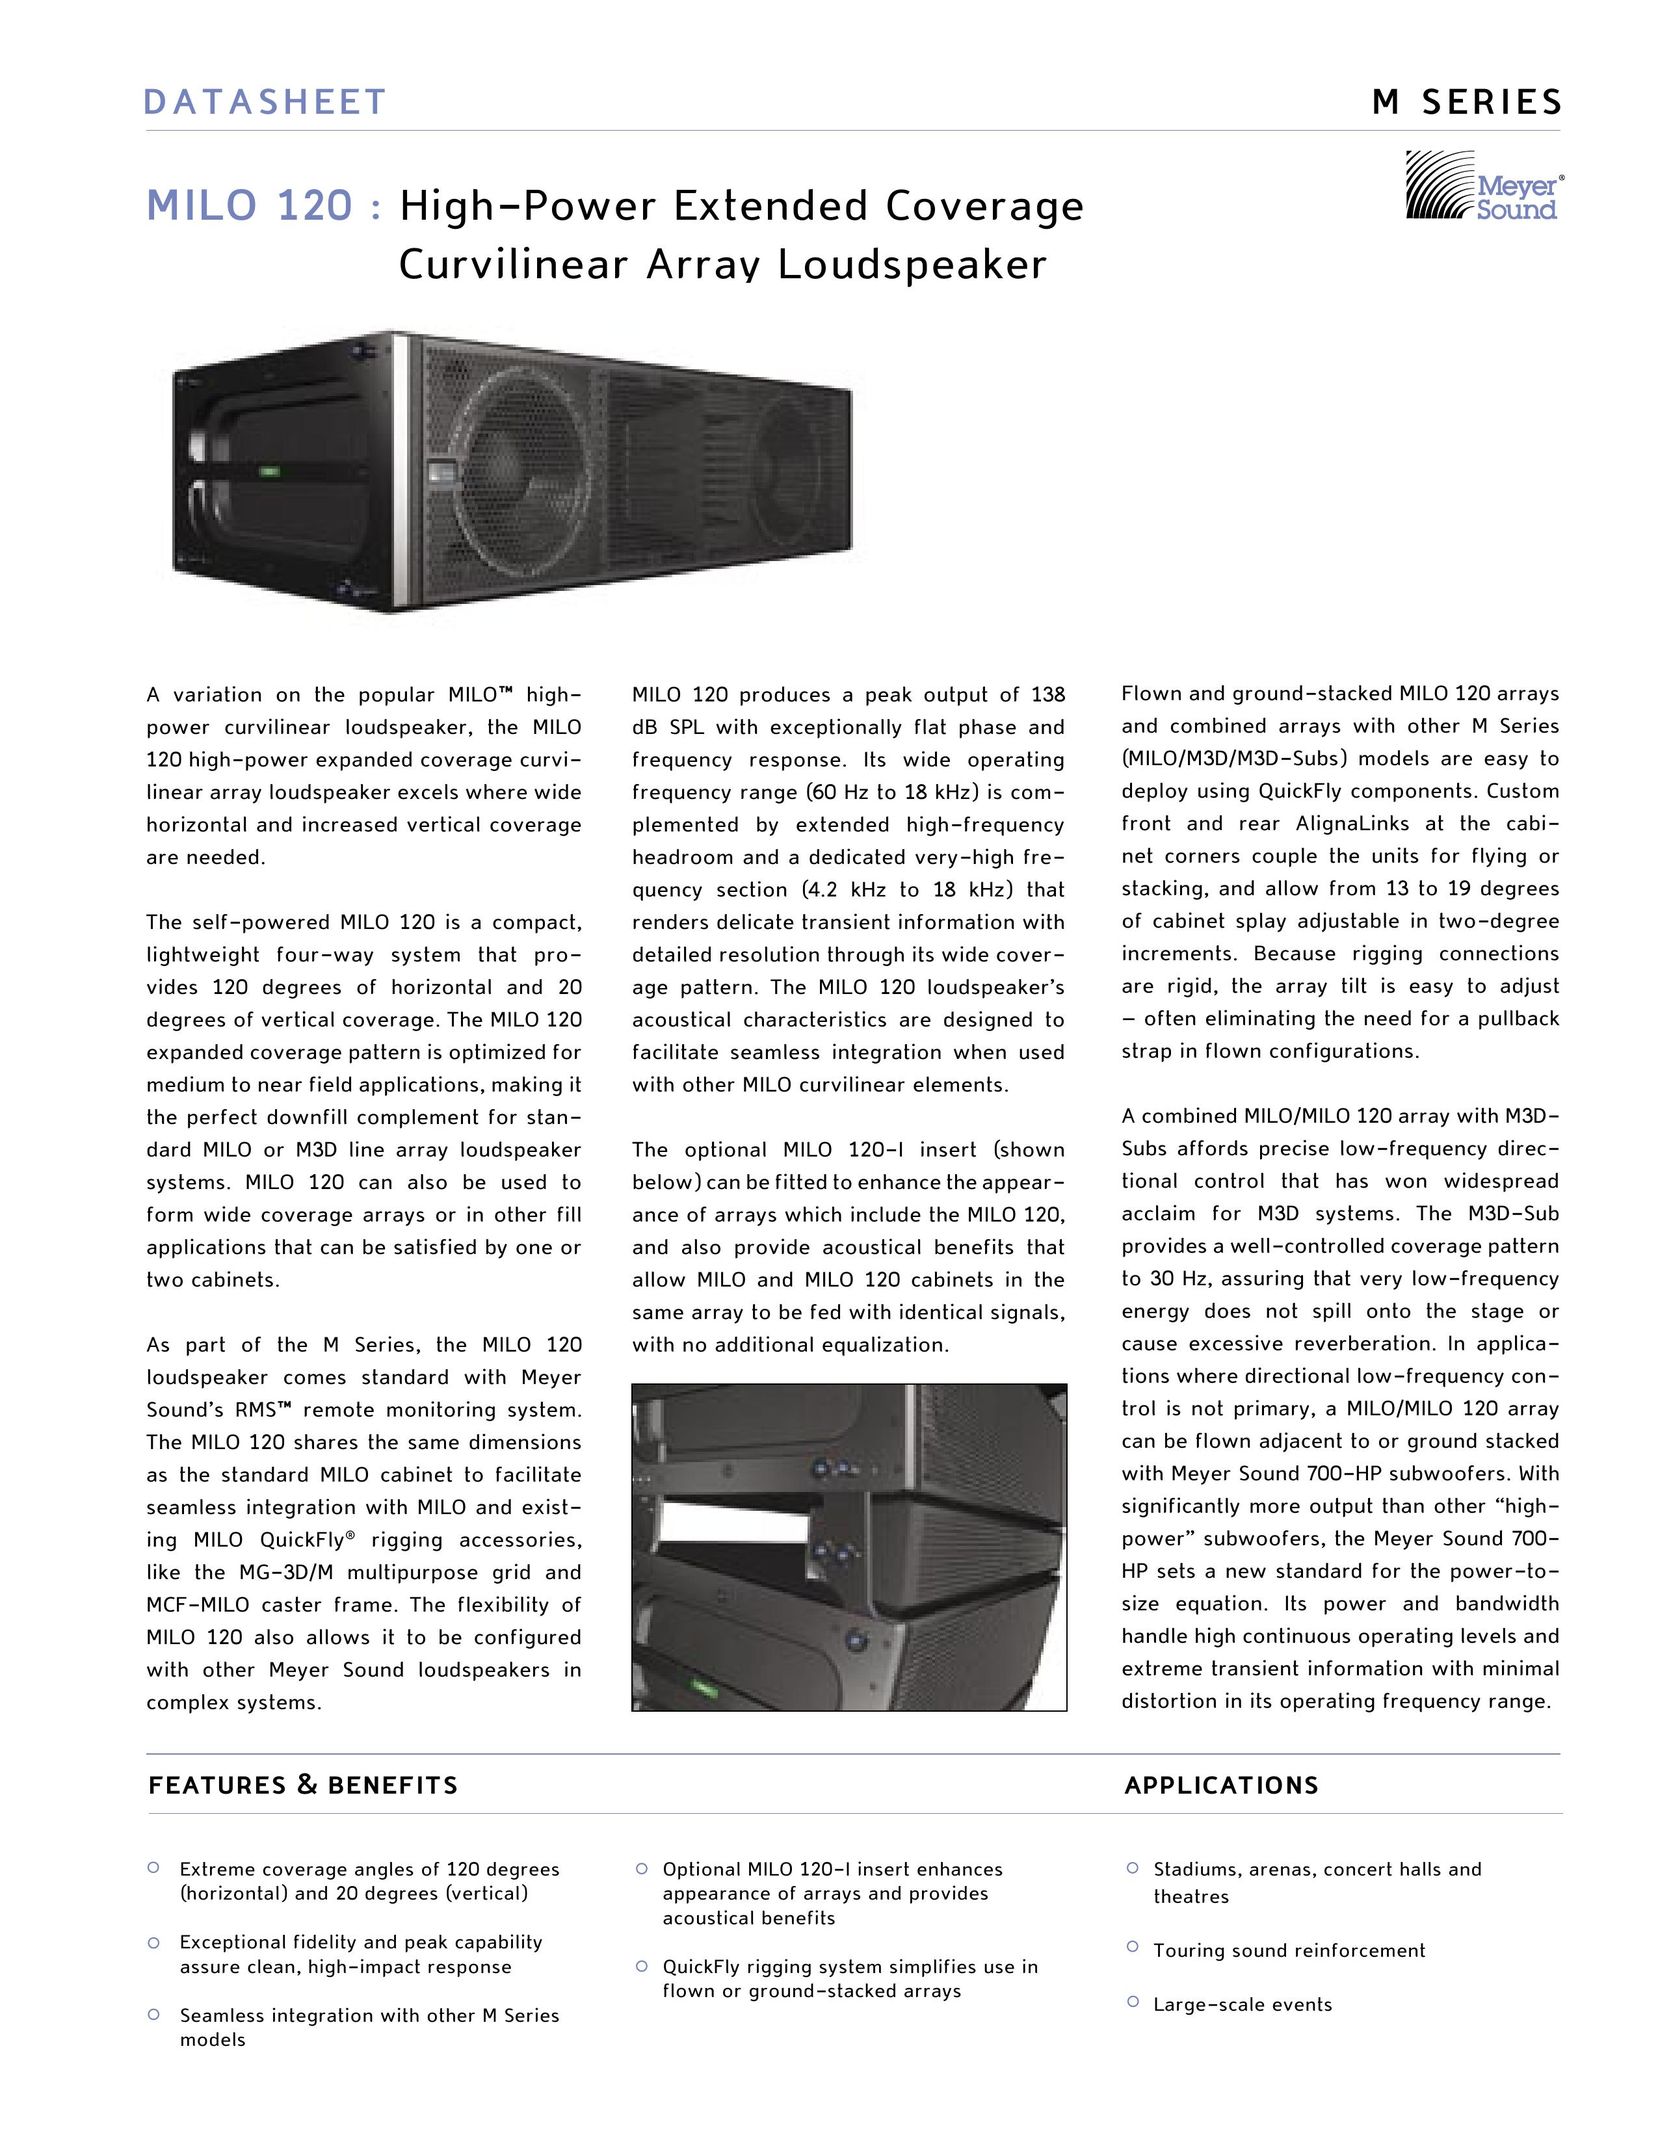 Meyer Sound MILO 120 Portable Speaker User Manual